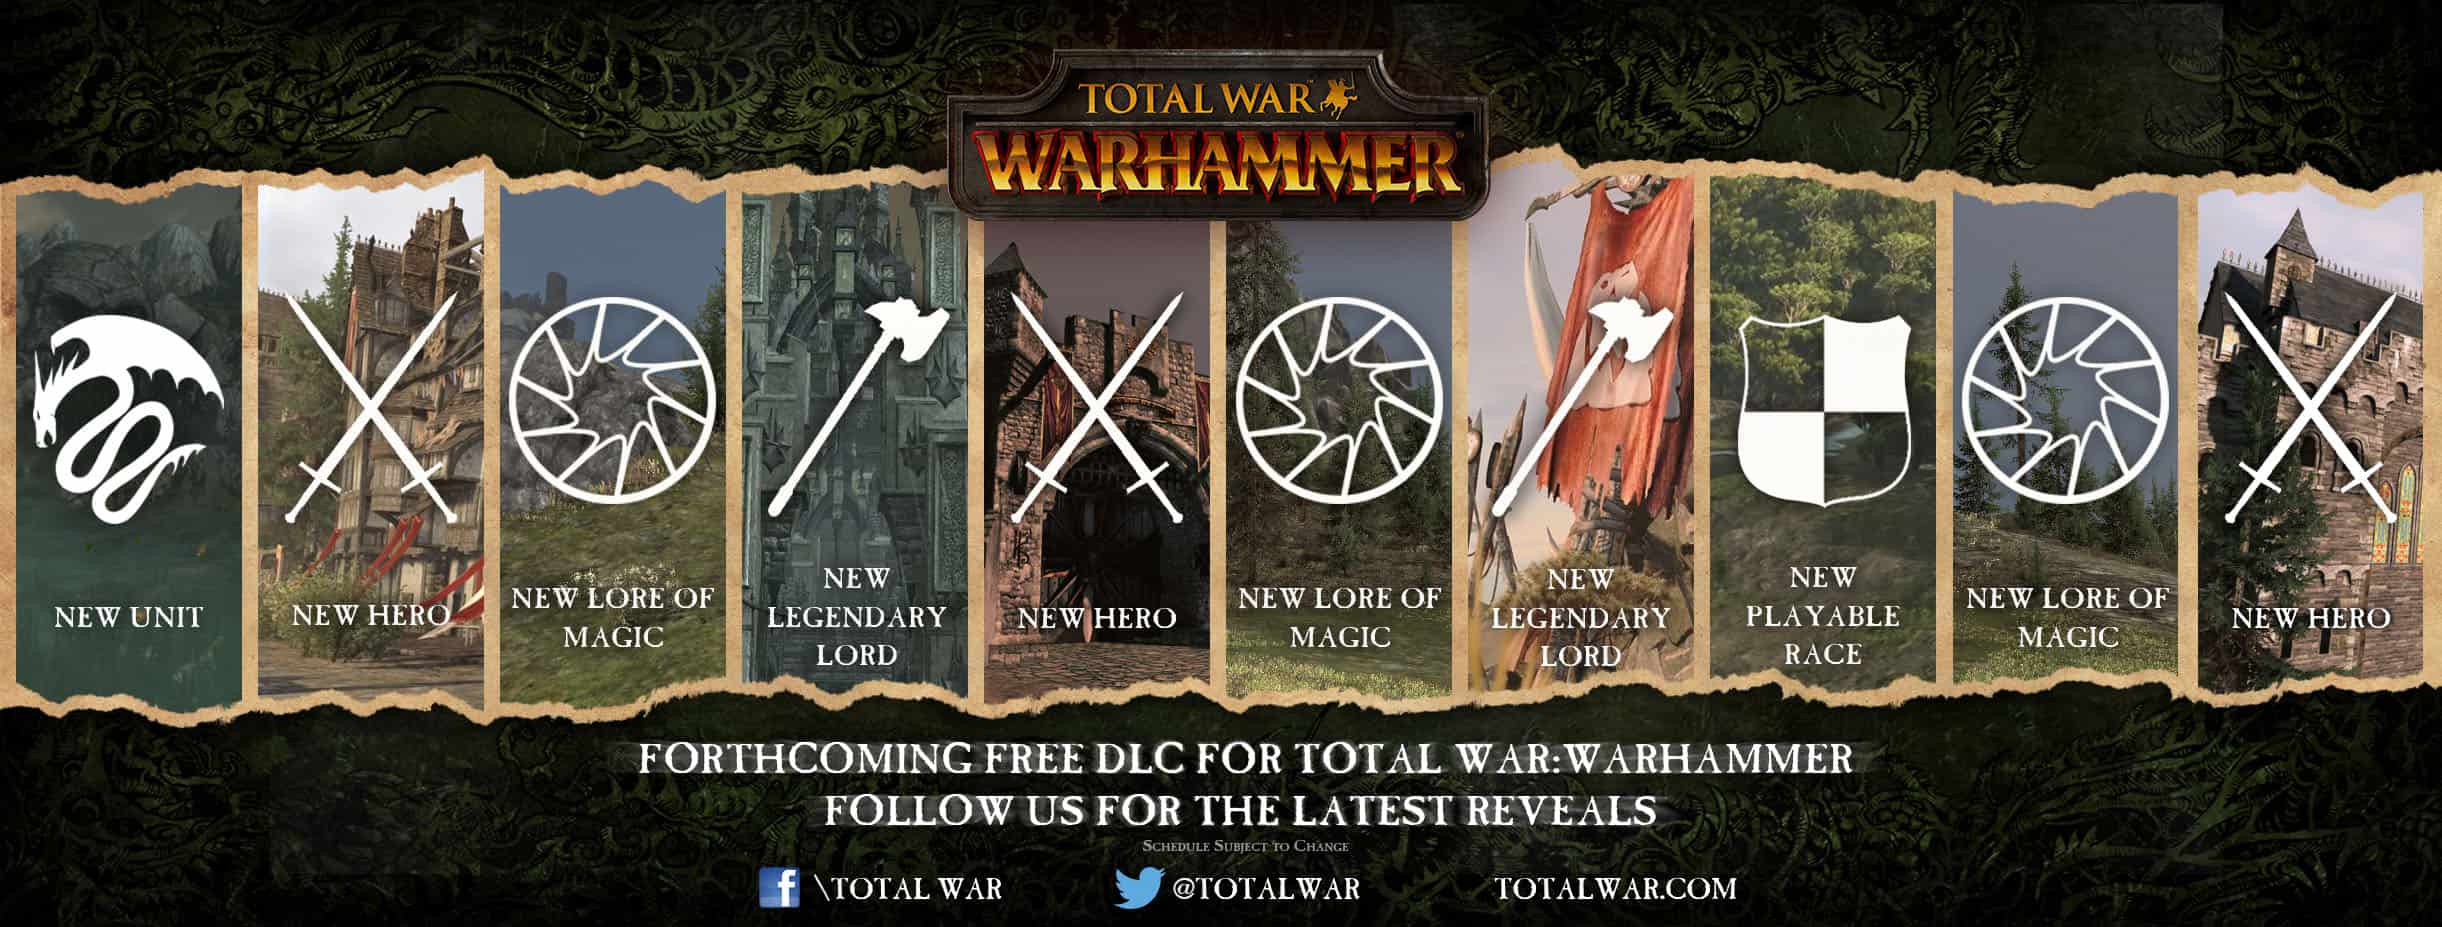 Total War Warhammer FLC roadmap